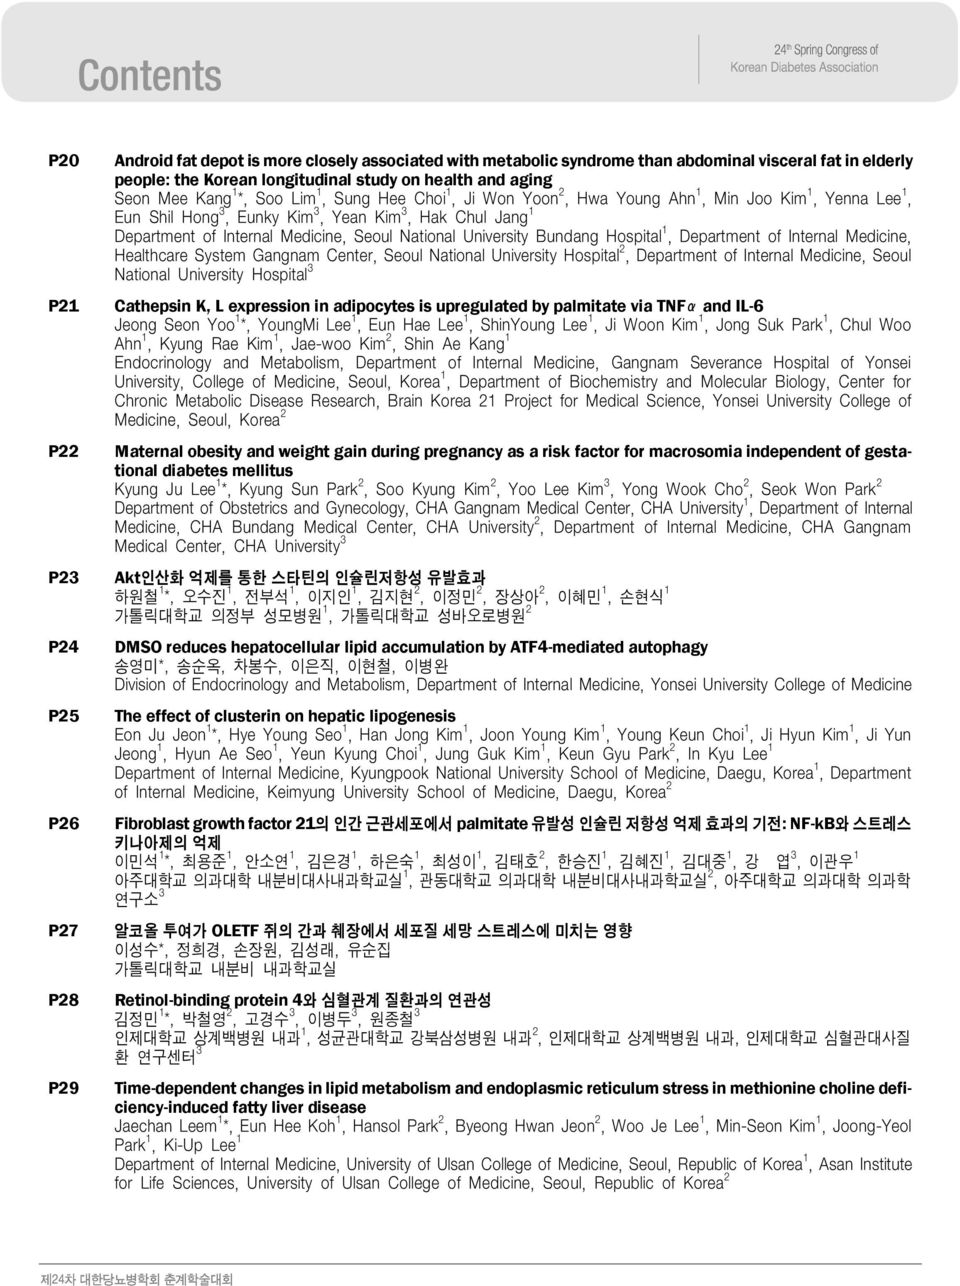 Medicine, Seoul National University Bundang Hospital 1, Department of Internal Medicine, Healthcare System Gangnam Center, Seoul National University Hospital 2, Department of Internal Medicine, Seoul